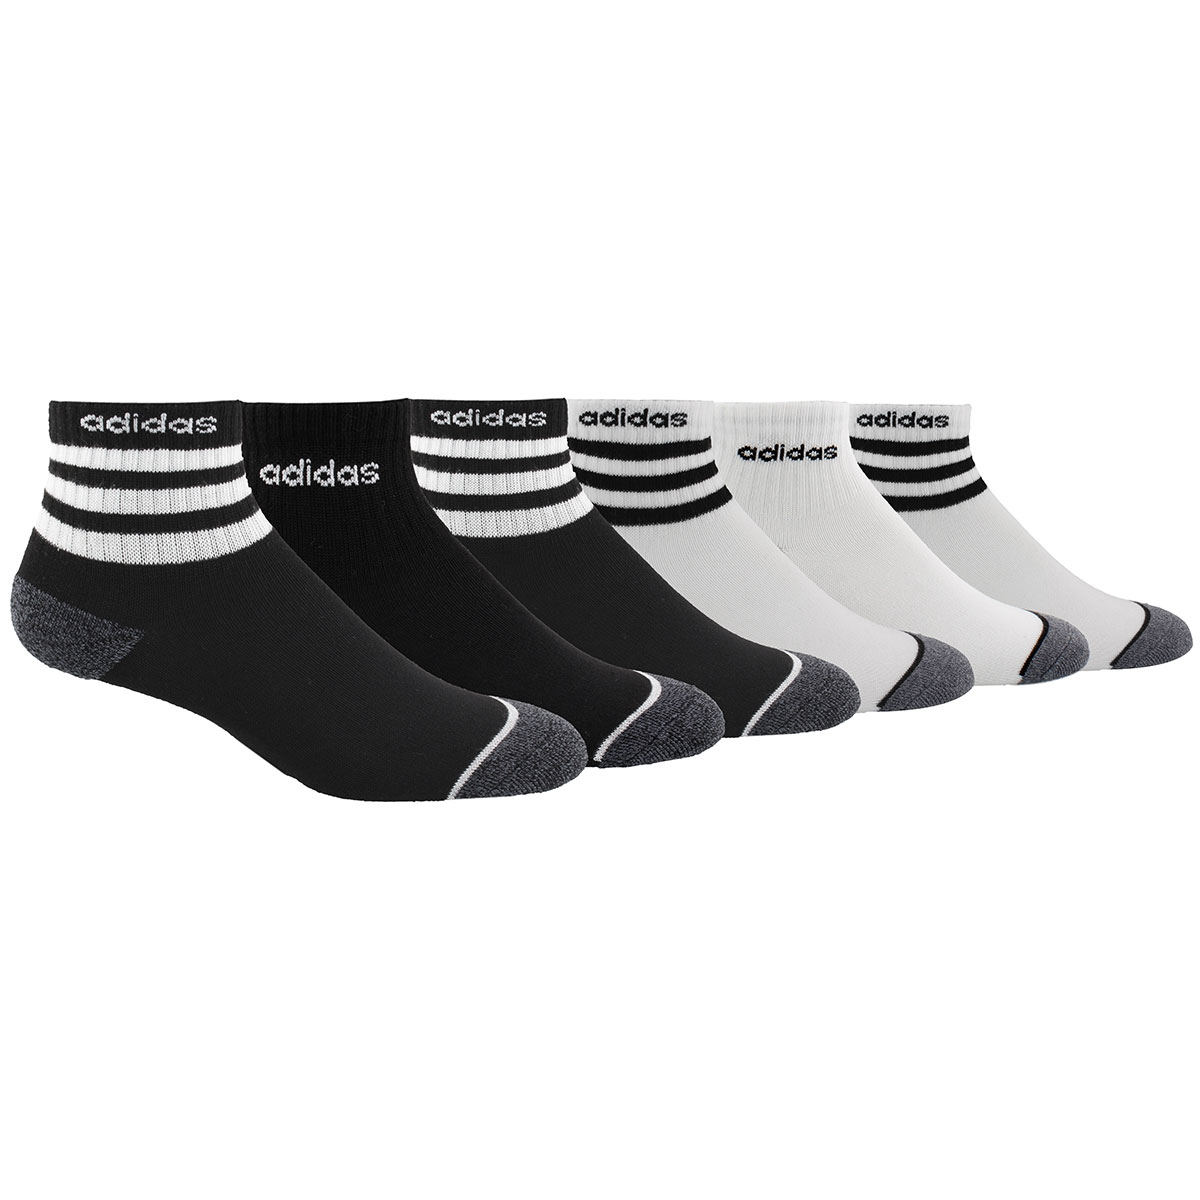 Adidas Boys' 3 Stripe Quarter Socks, 6-Pack - Black, M